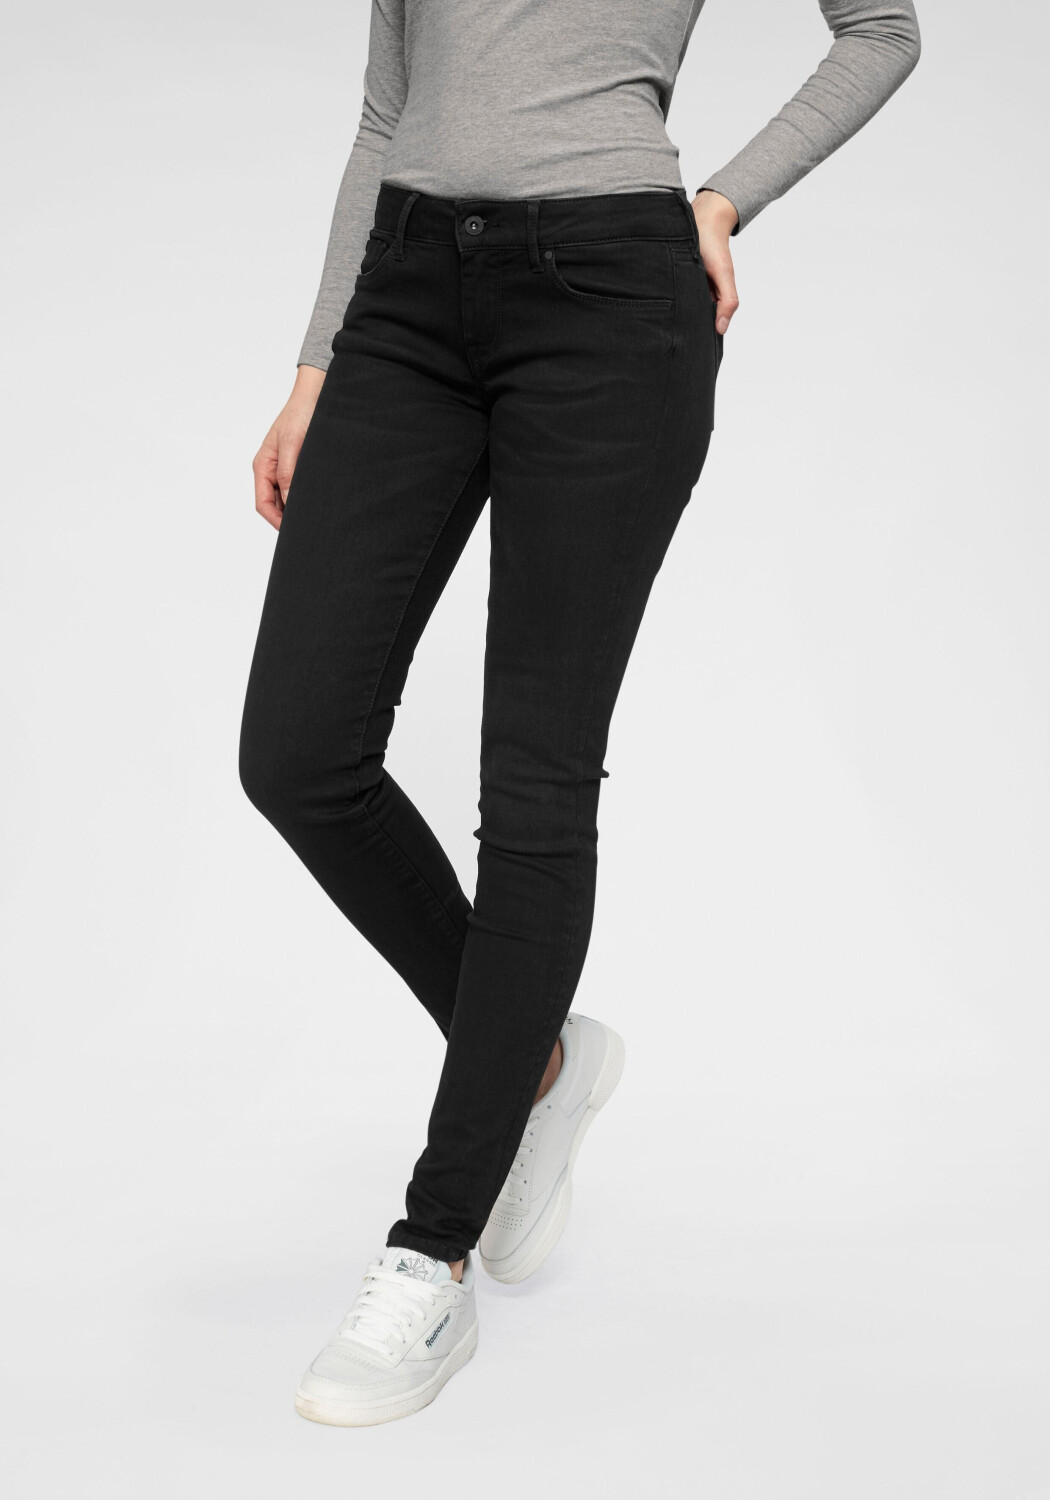 bei | Waist Jeans 39,28 Soho Jeans S98 Preisvergleich black Fit € Mid Slim Pepe denim ab